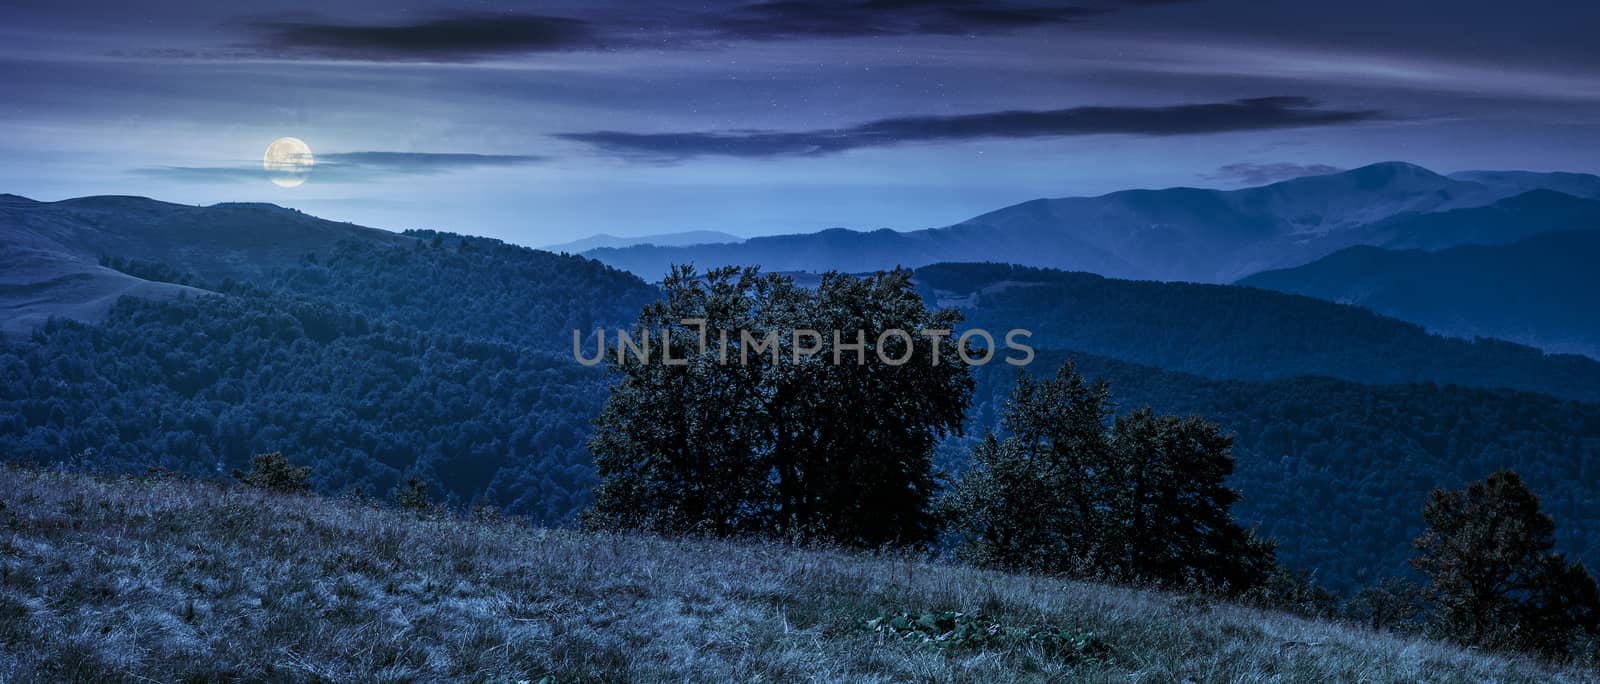 beautiful panorama of Carpathians at night by Pellinni